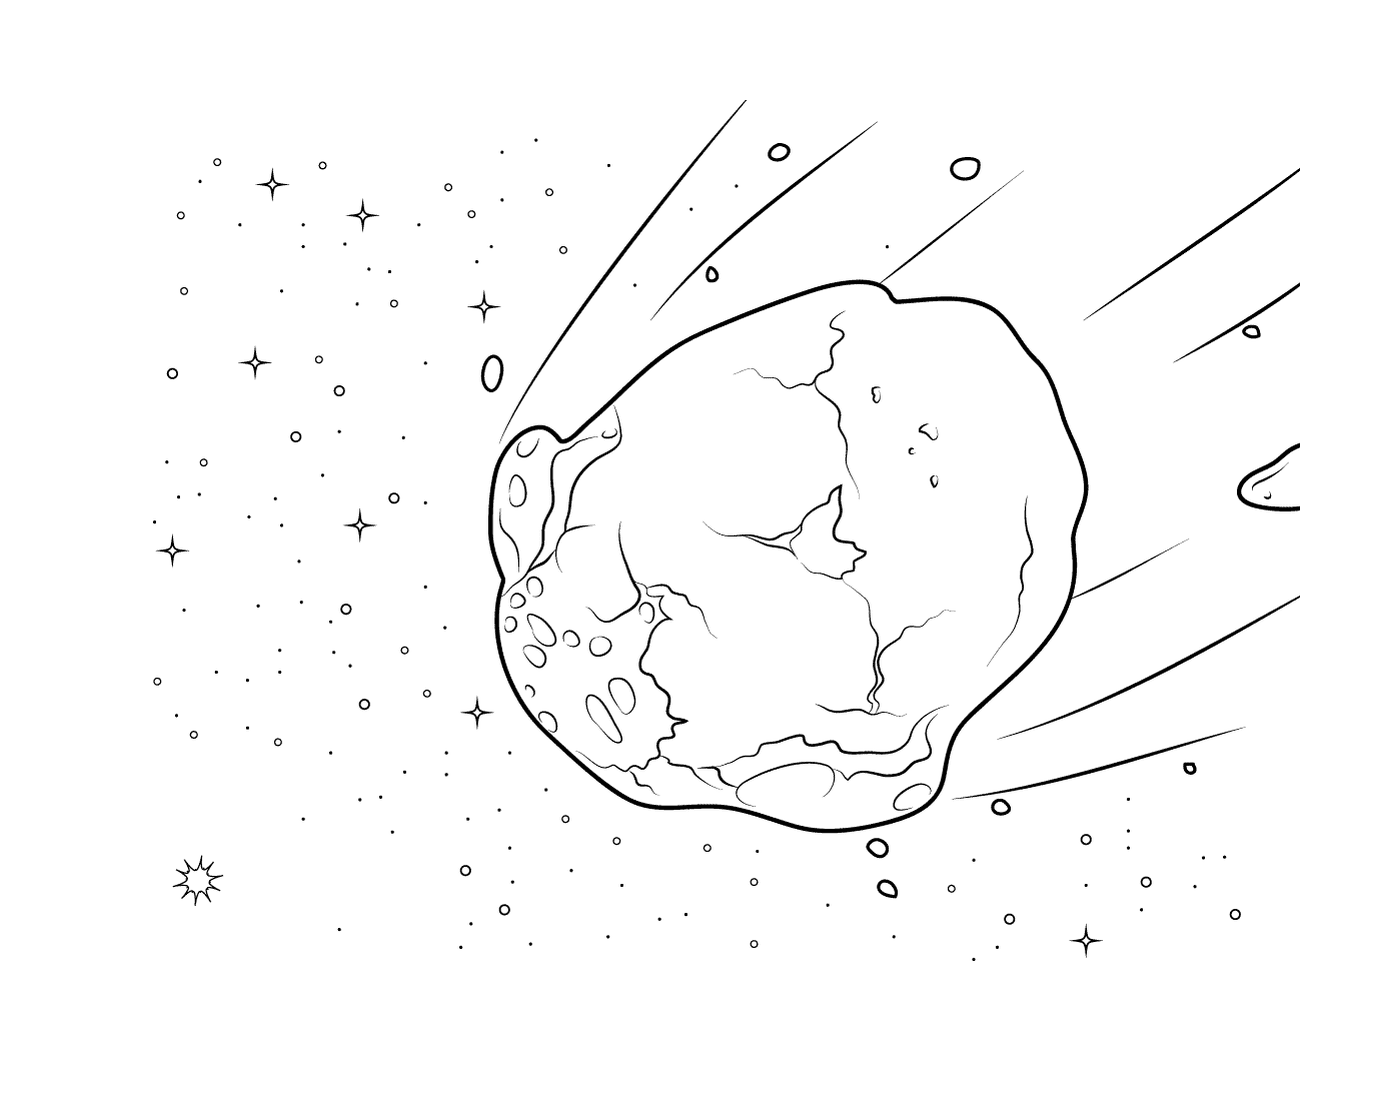  Asteroide no céu 